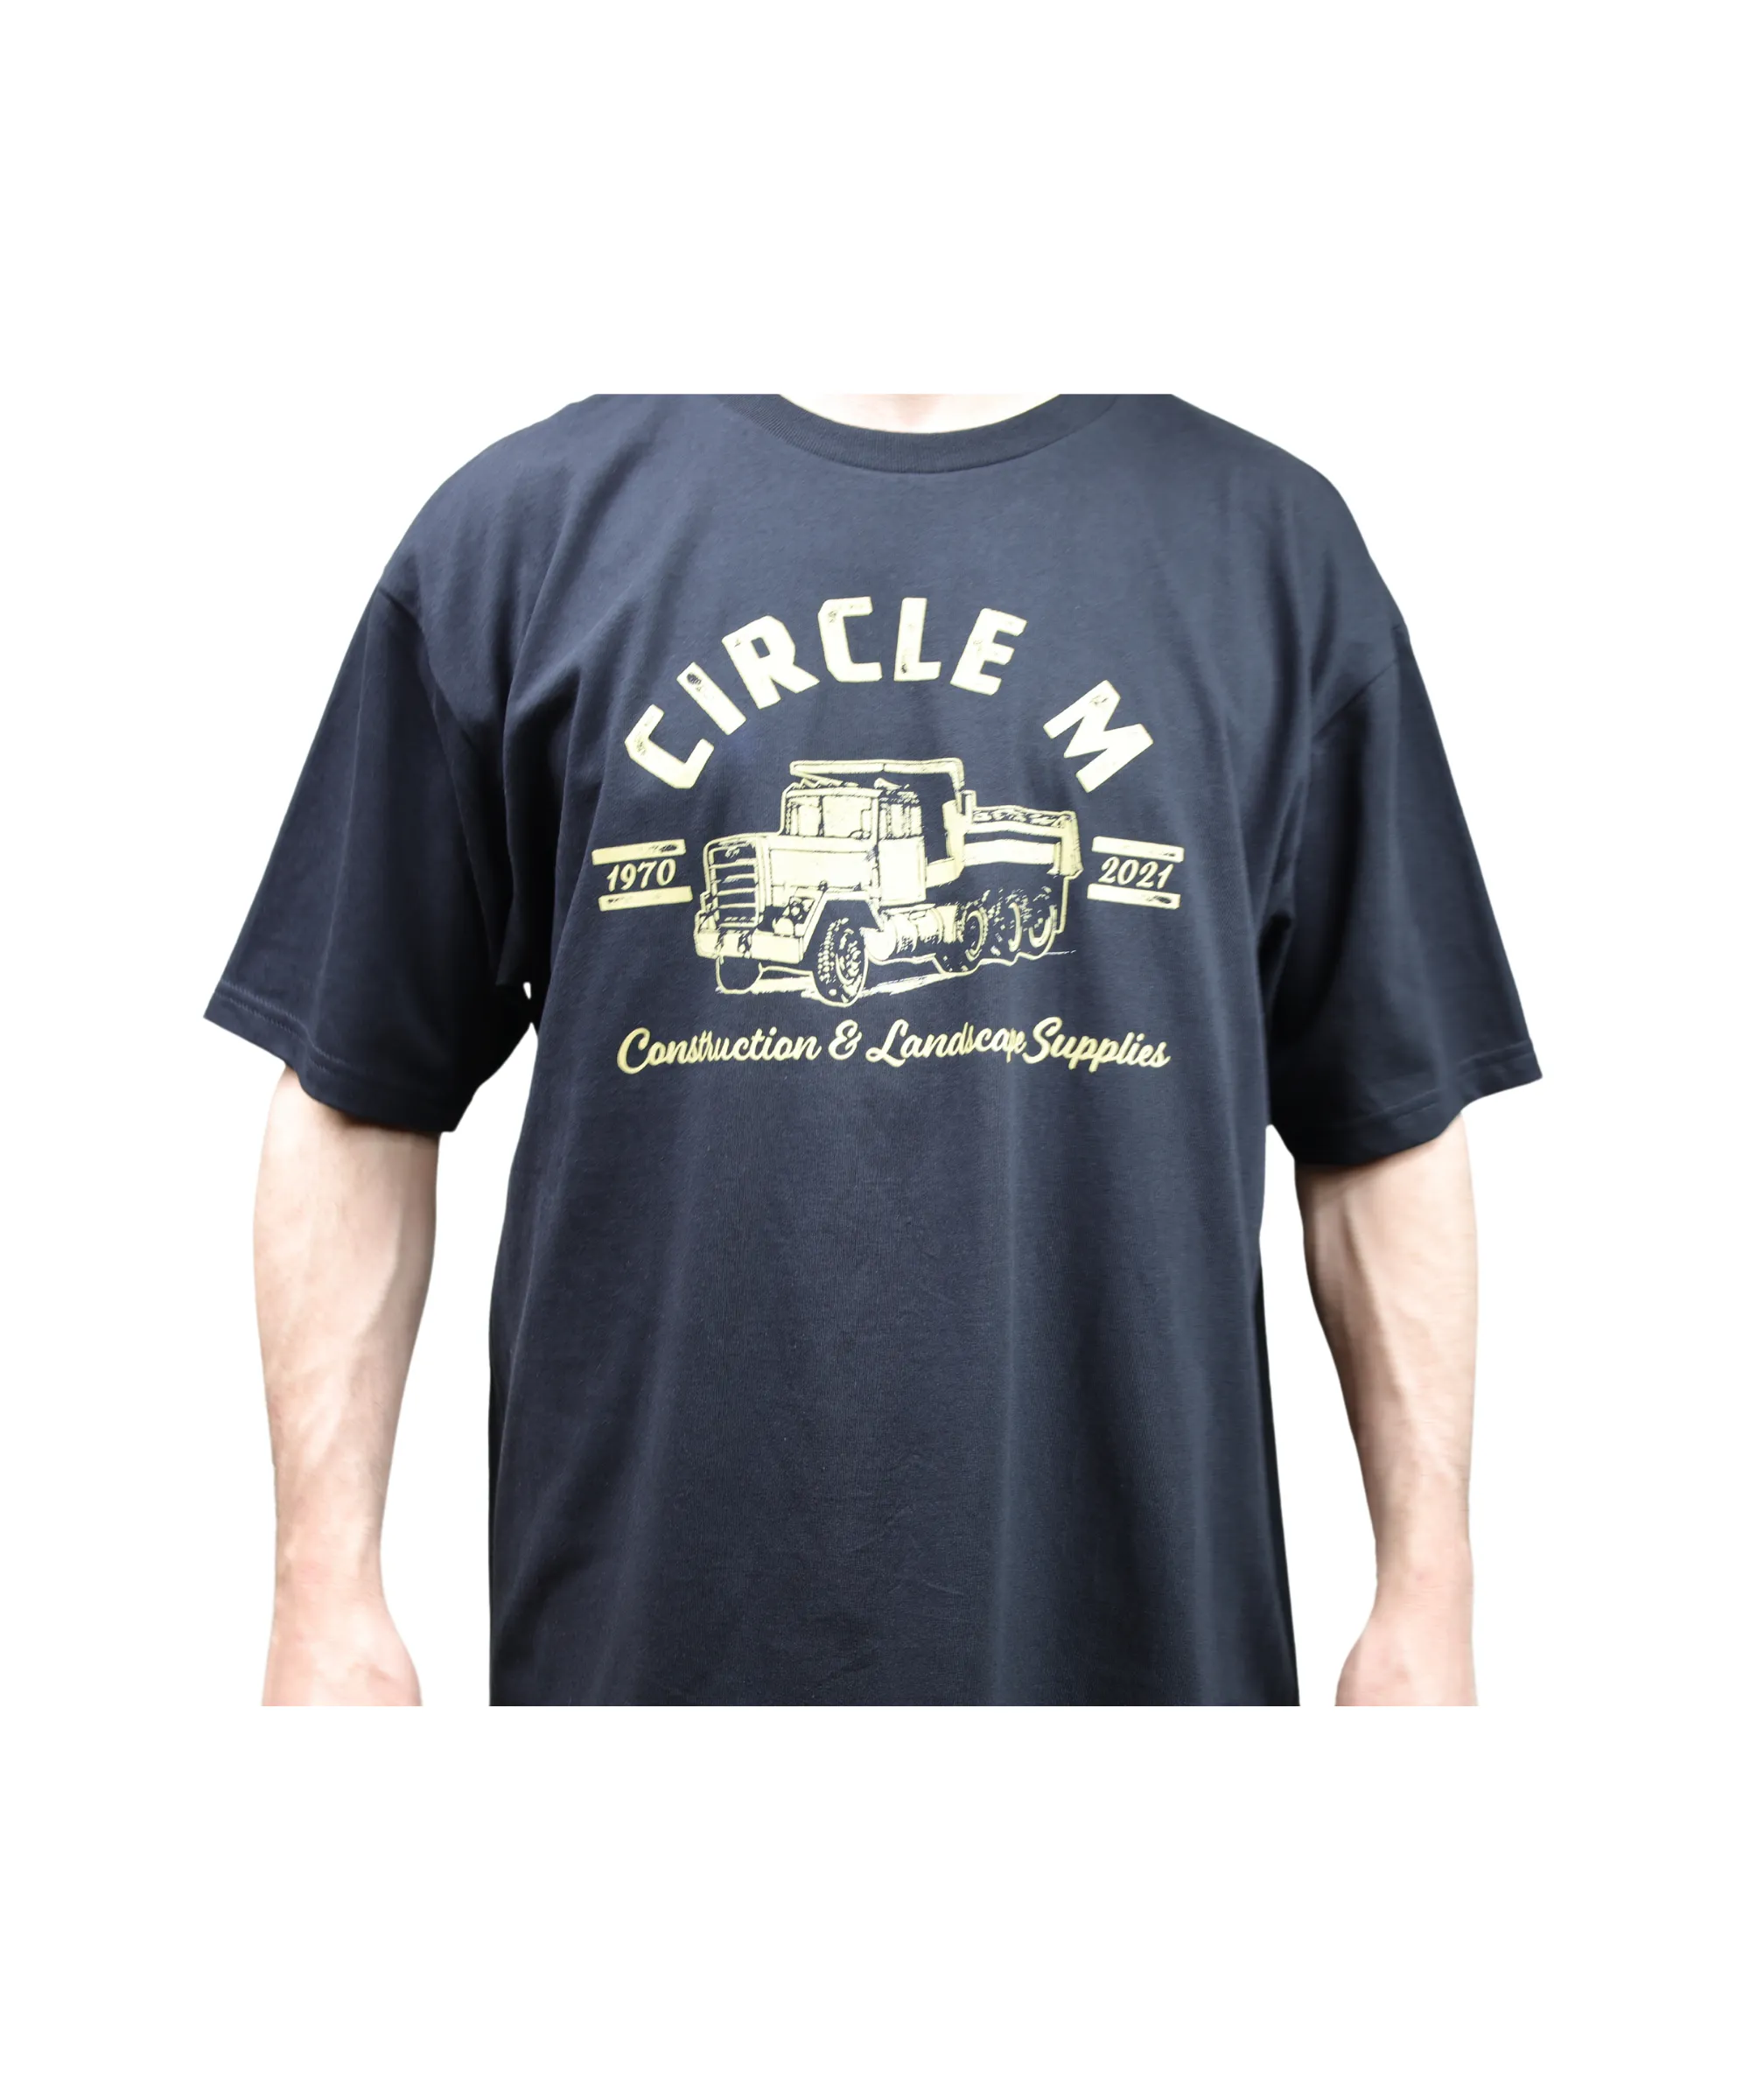 circle m shirt for sale